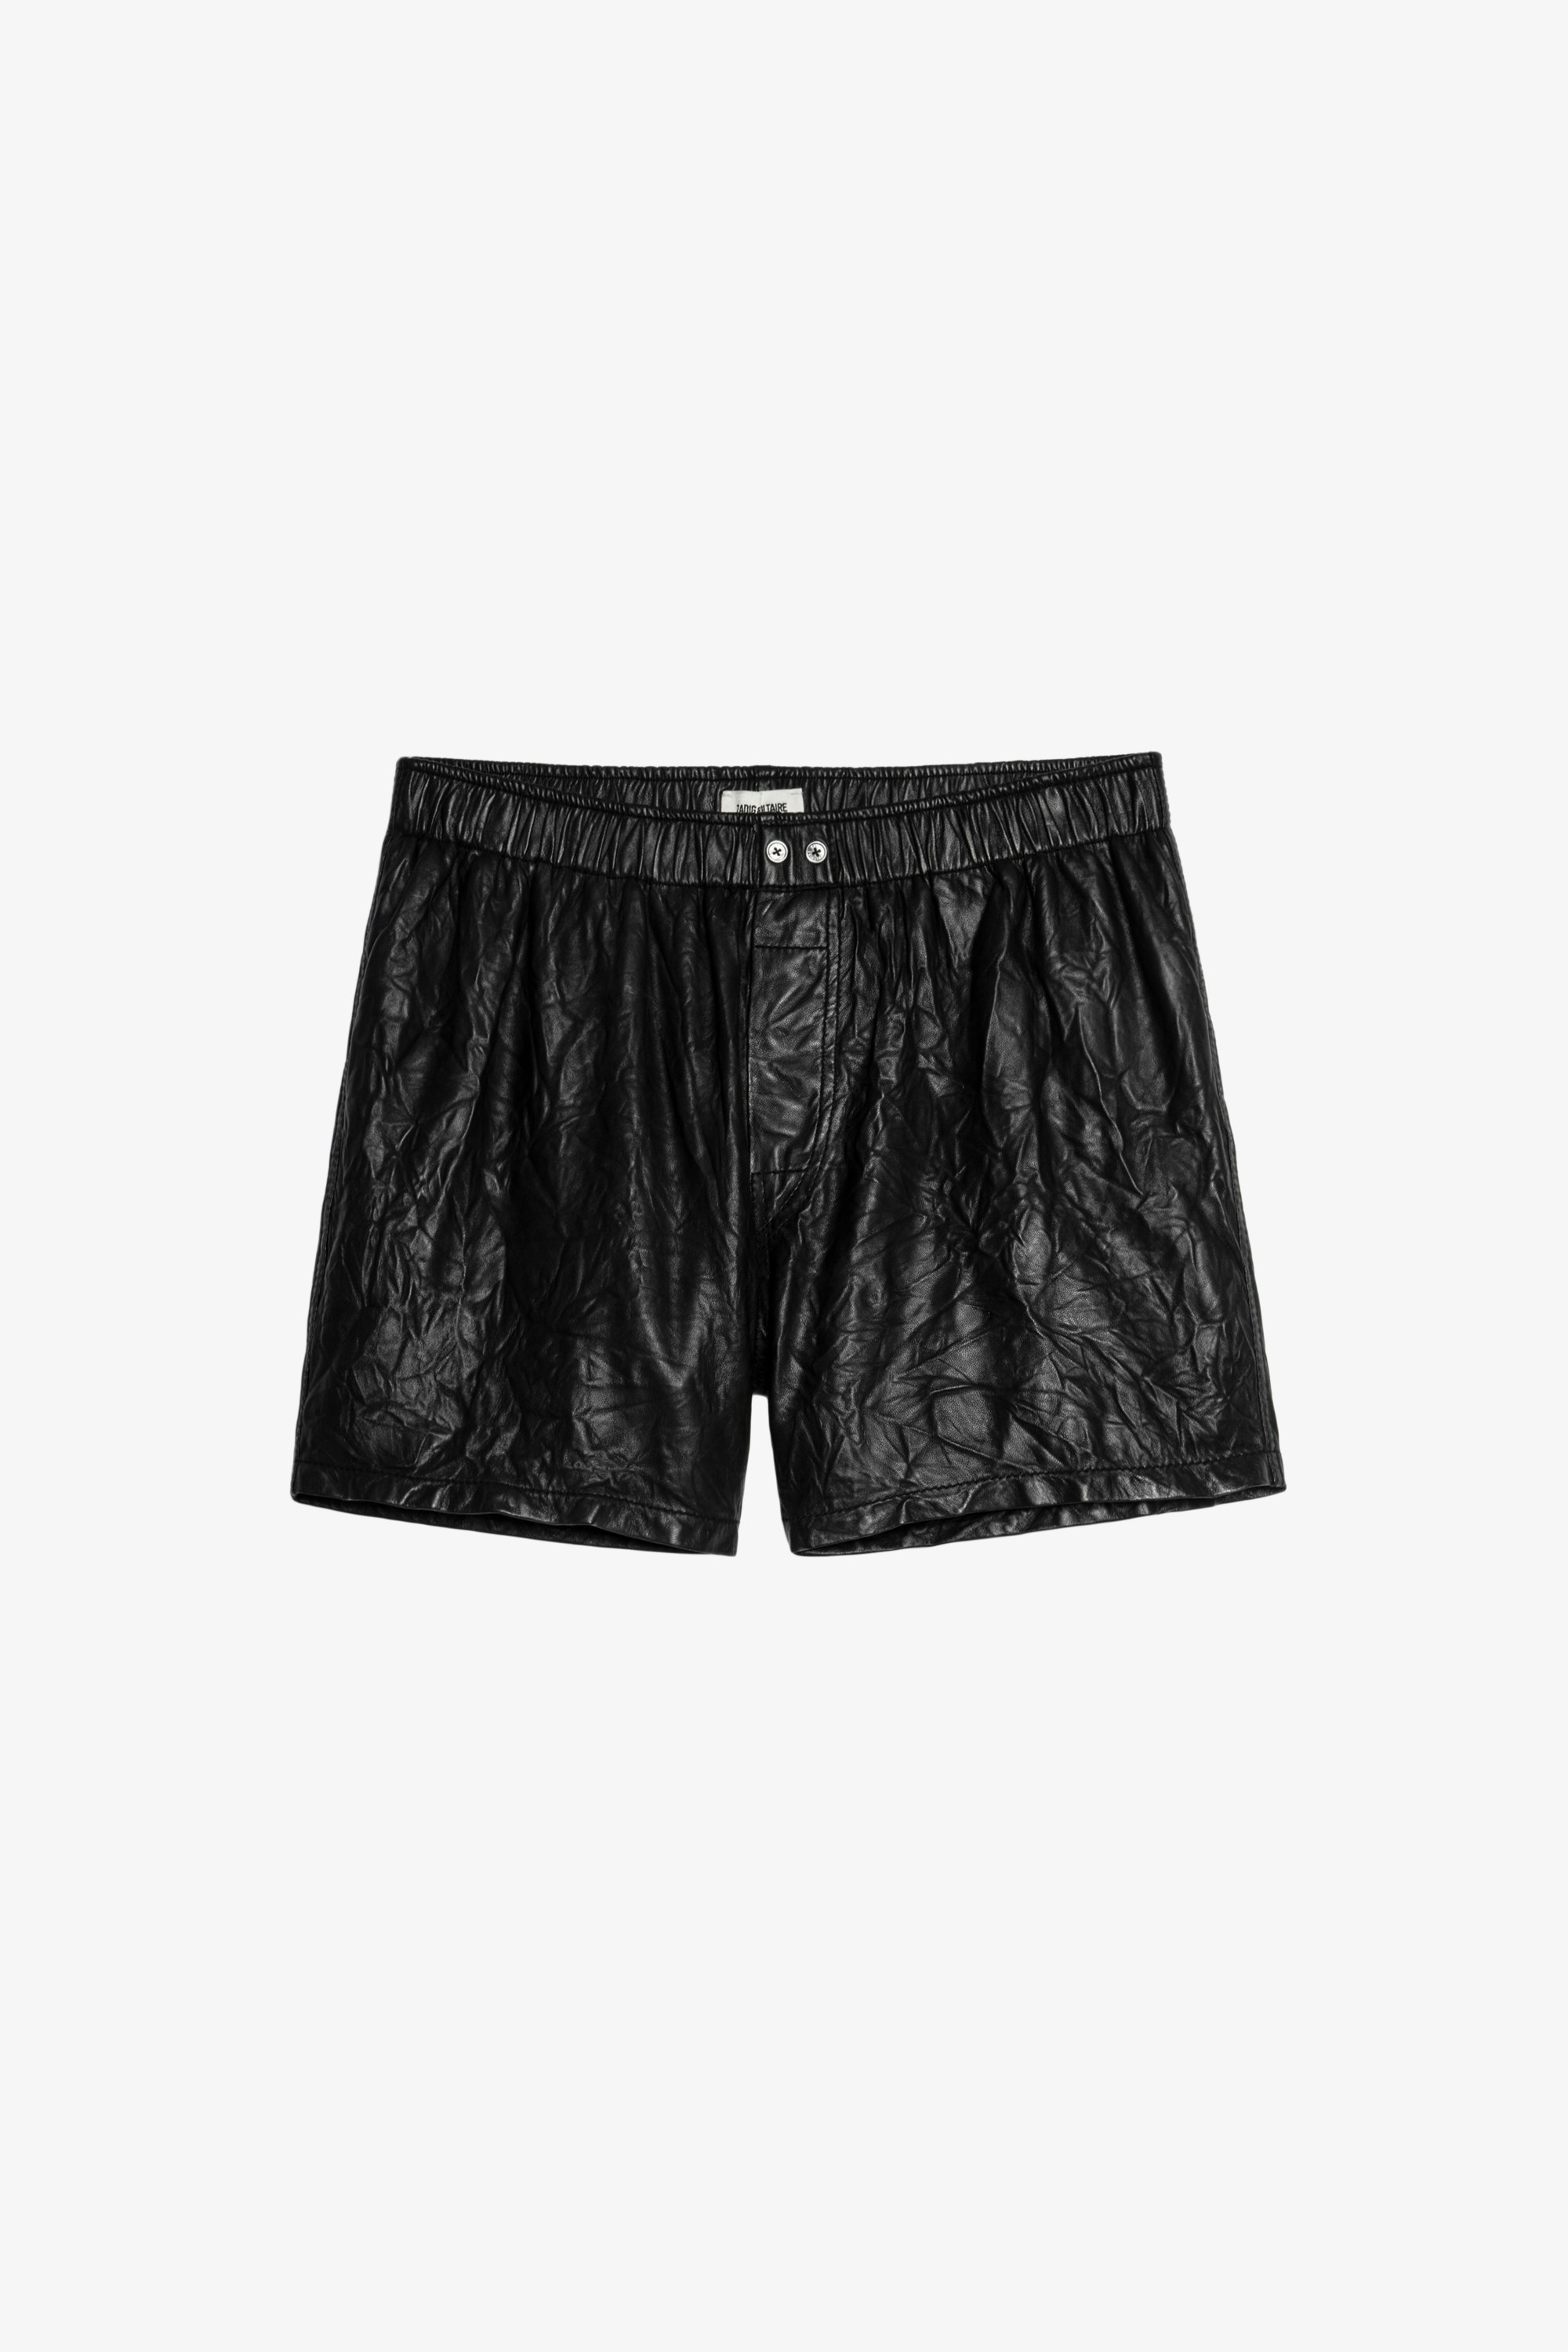 Pax ショーツ クリンクル レザー - Women’s black leather shorts.